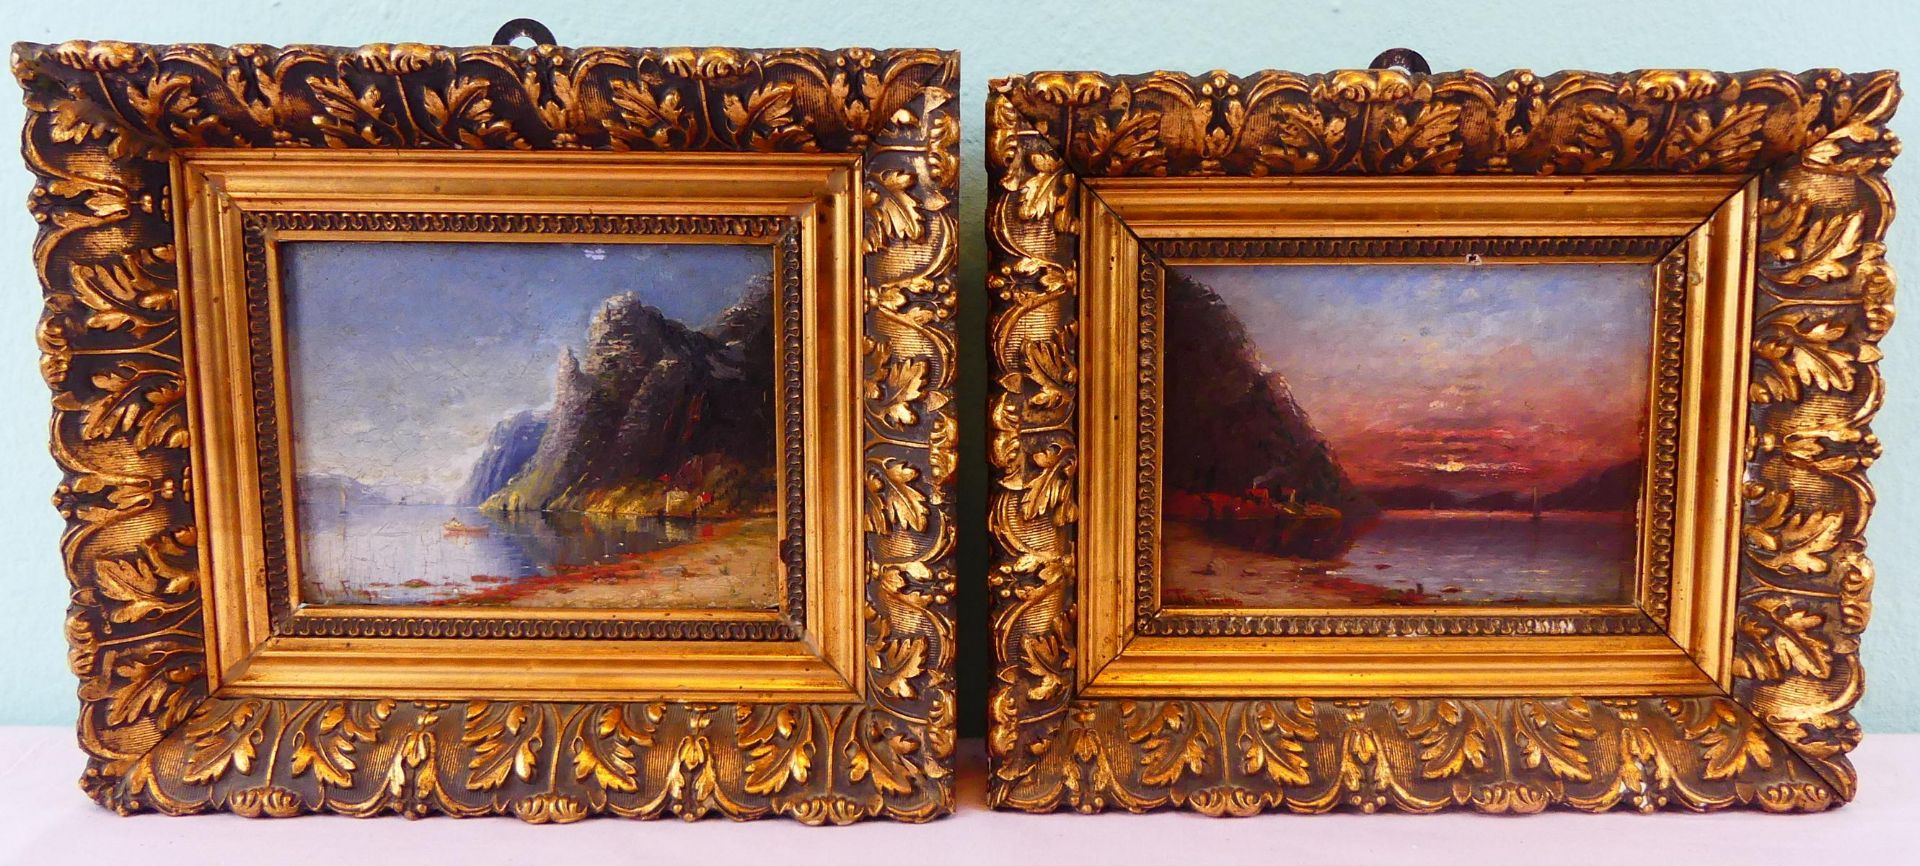 THERESE FUCHS (1849-1898), Paar Gemälde, "Fjordlandschaft", Öl/Holz